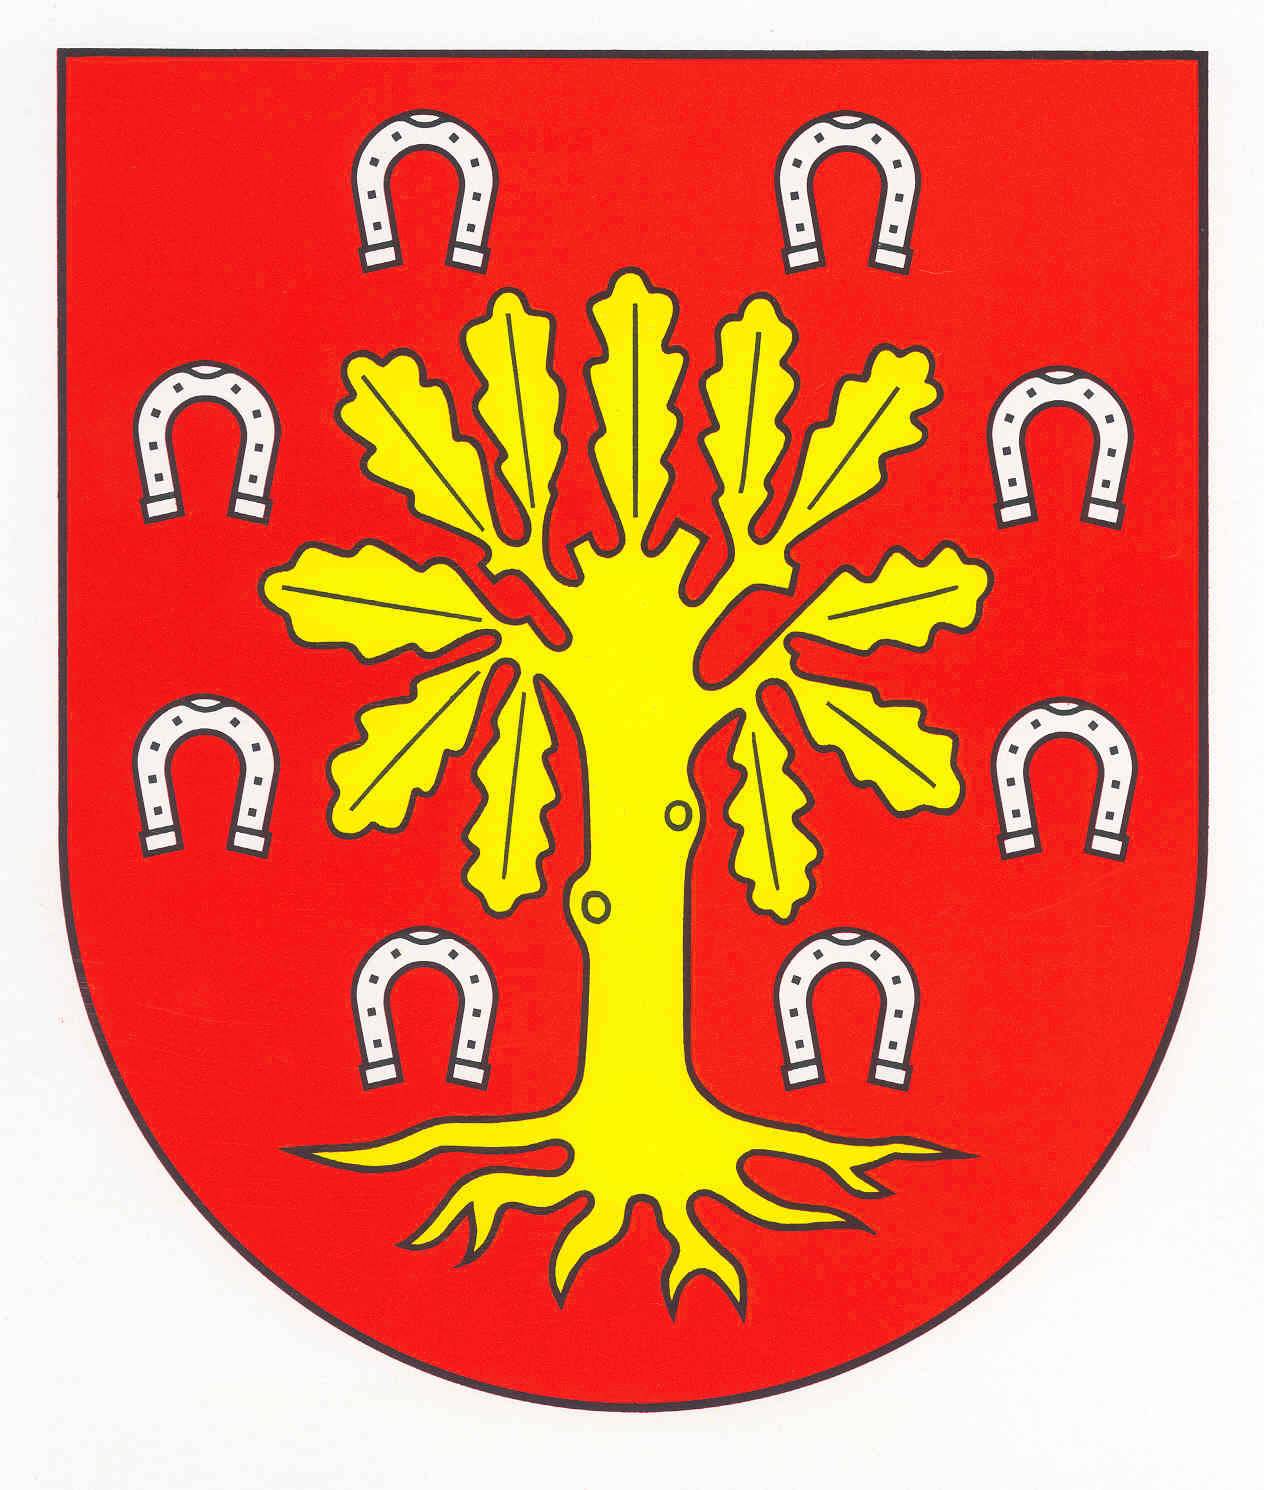 Wappen Gemeinde Schieren, Kreis Segeberg